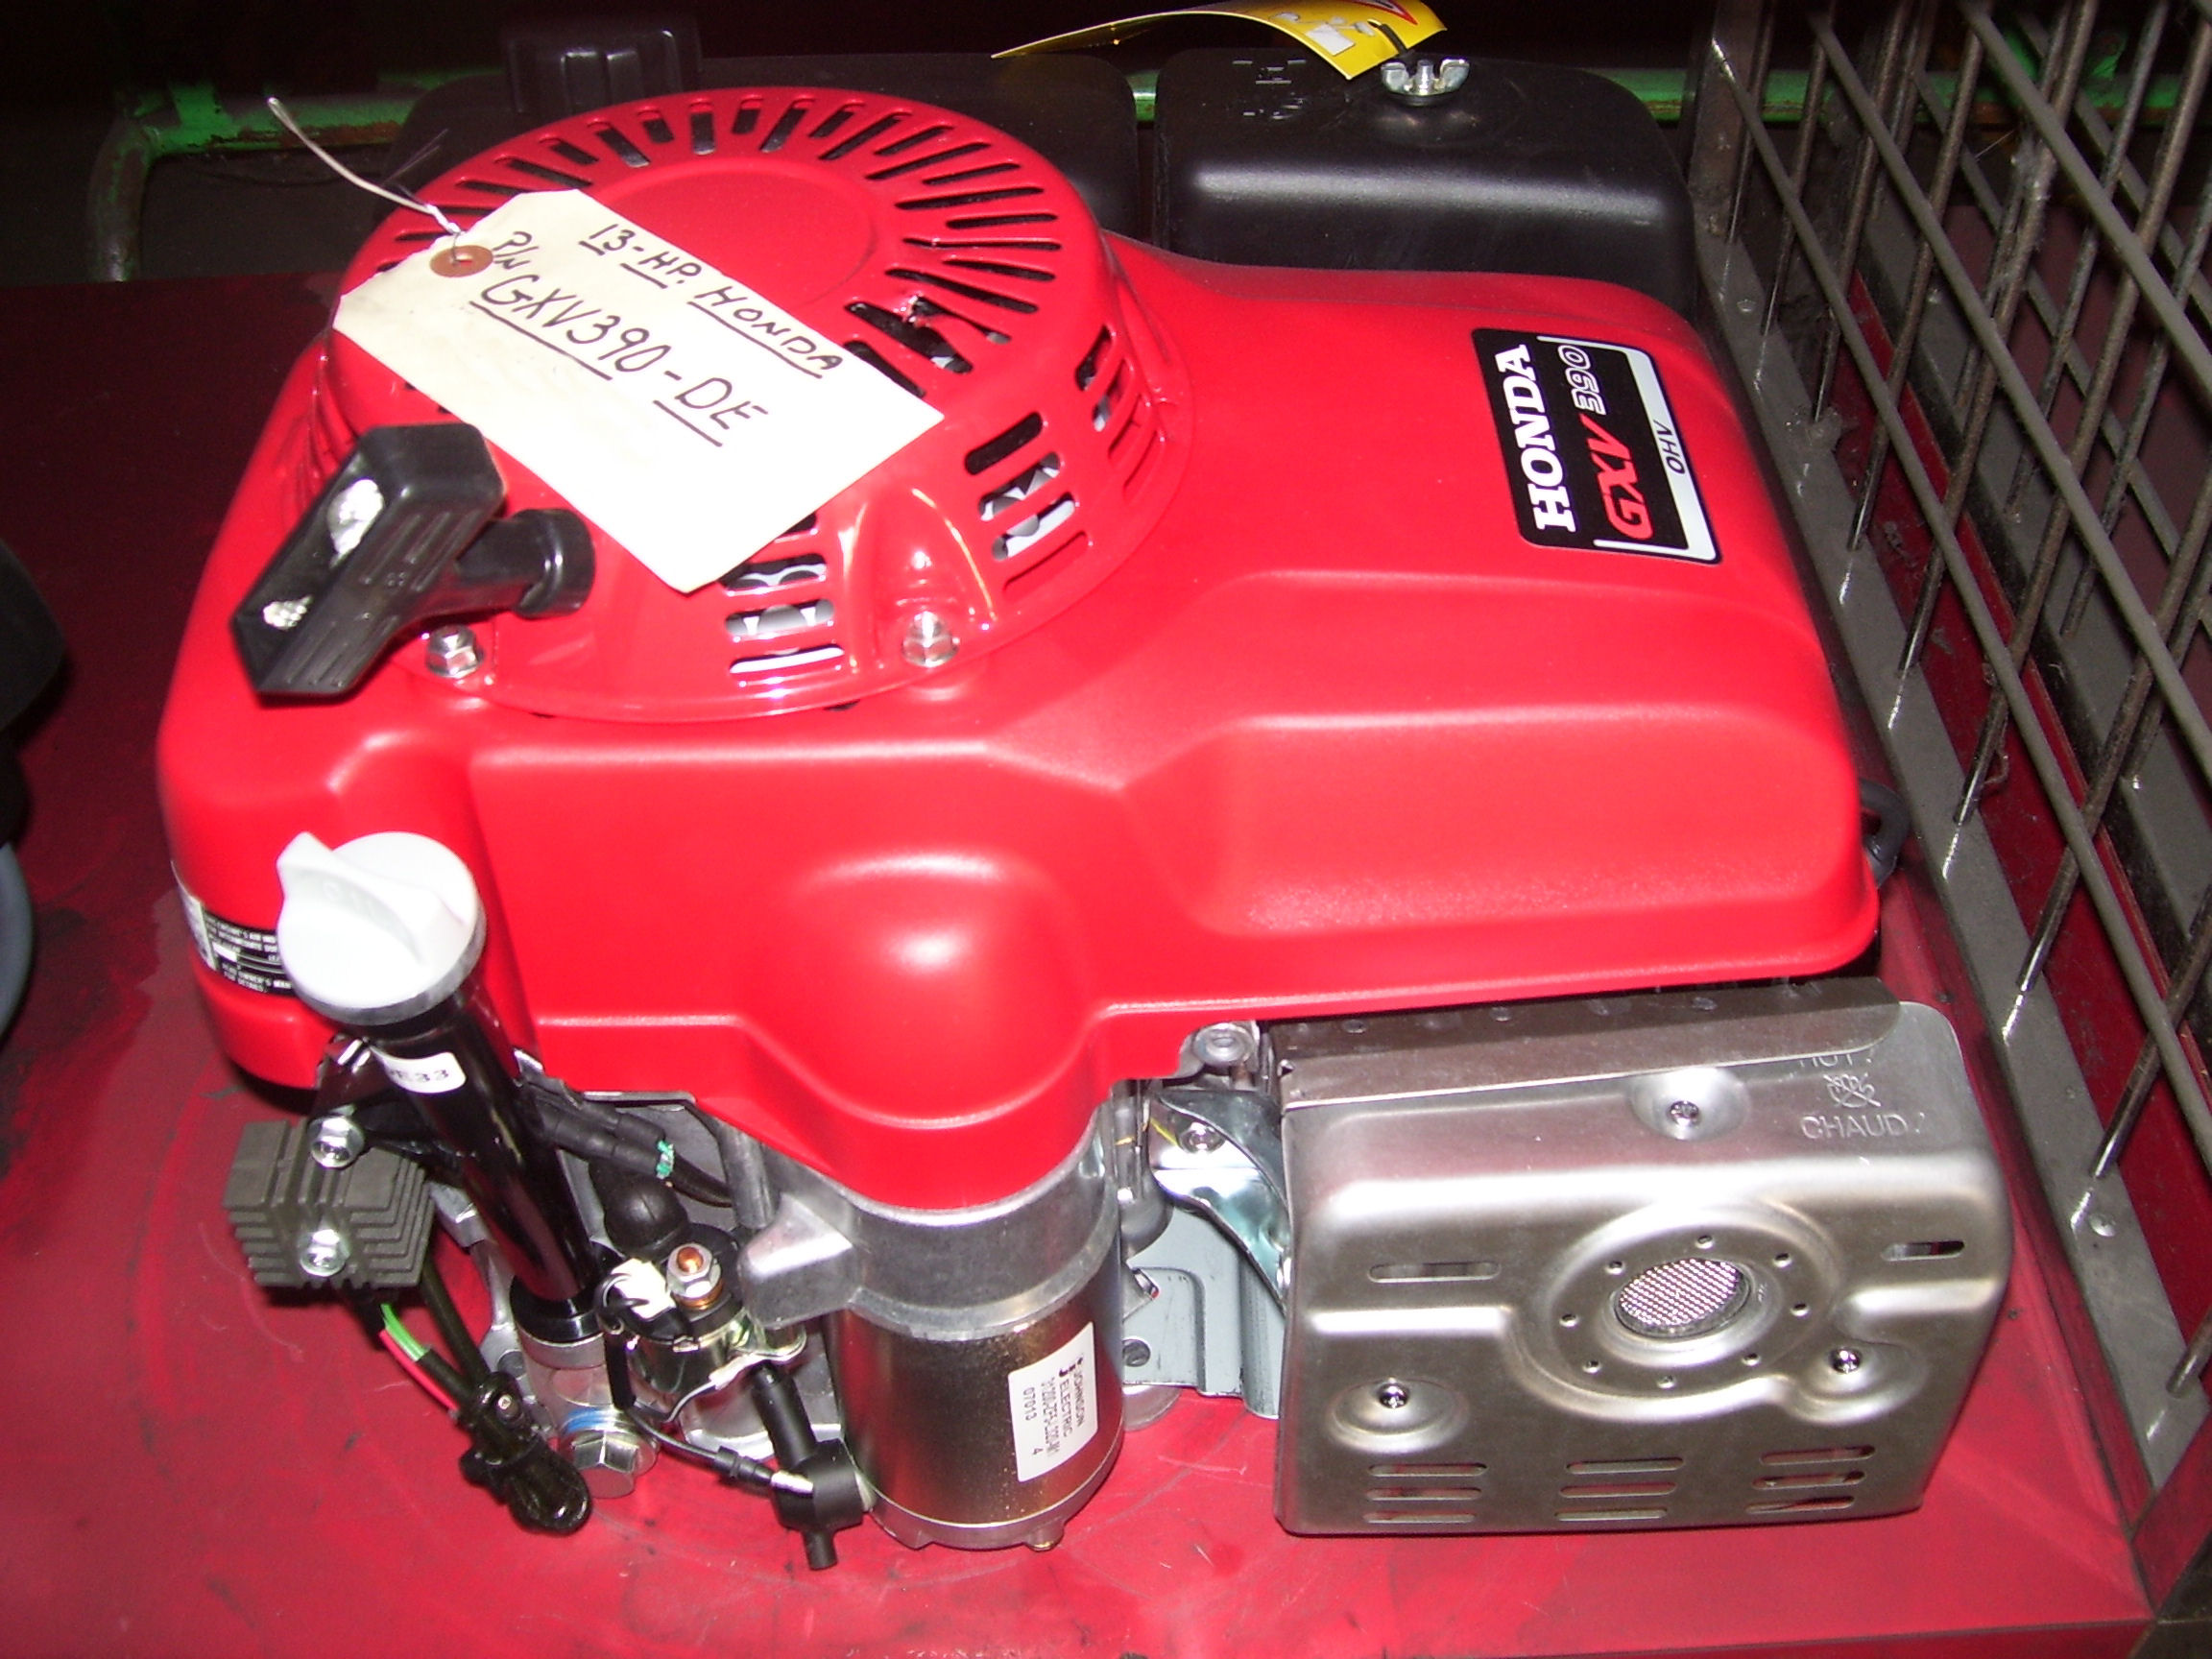 Briggs and stratton 12.5 hp engine repair manual free download